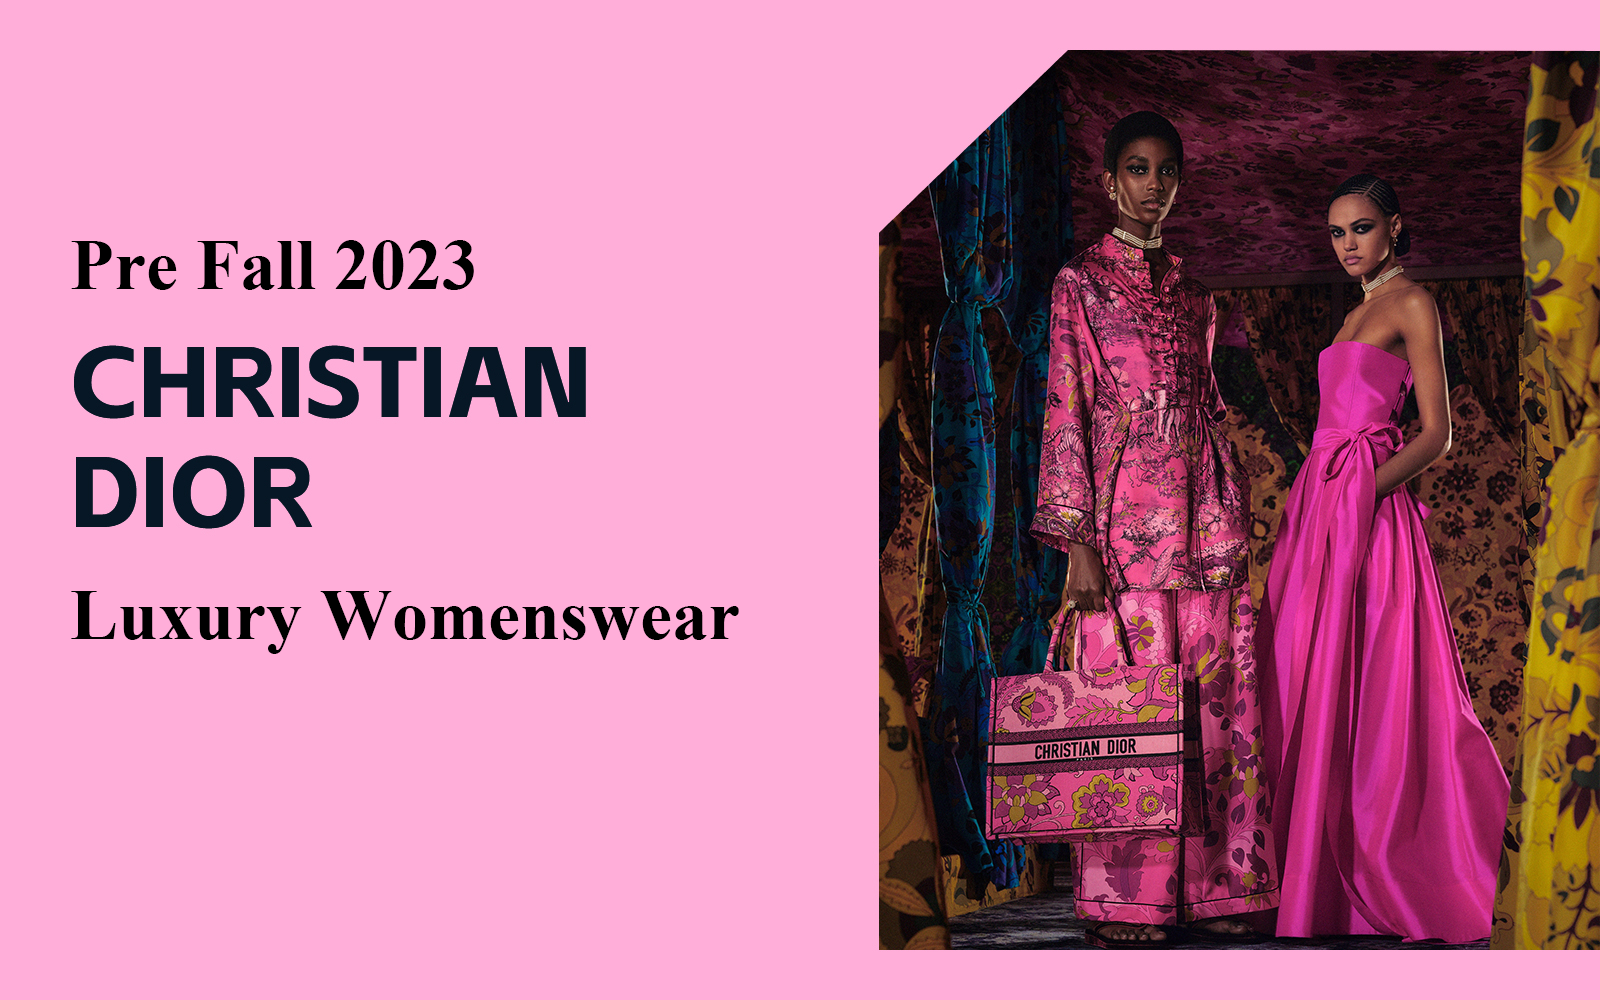 Elegant Modern -- The Analysis of Christian Dior The Luxury Womenswear Brand